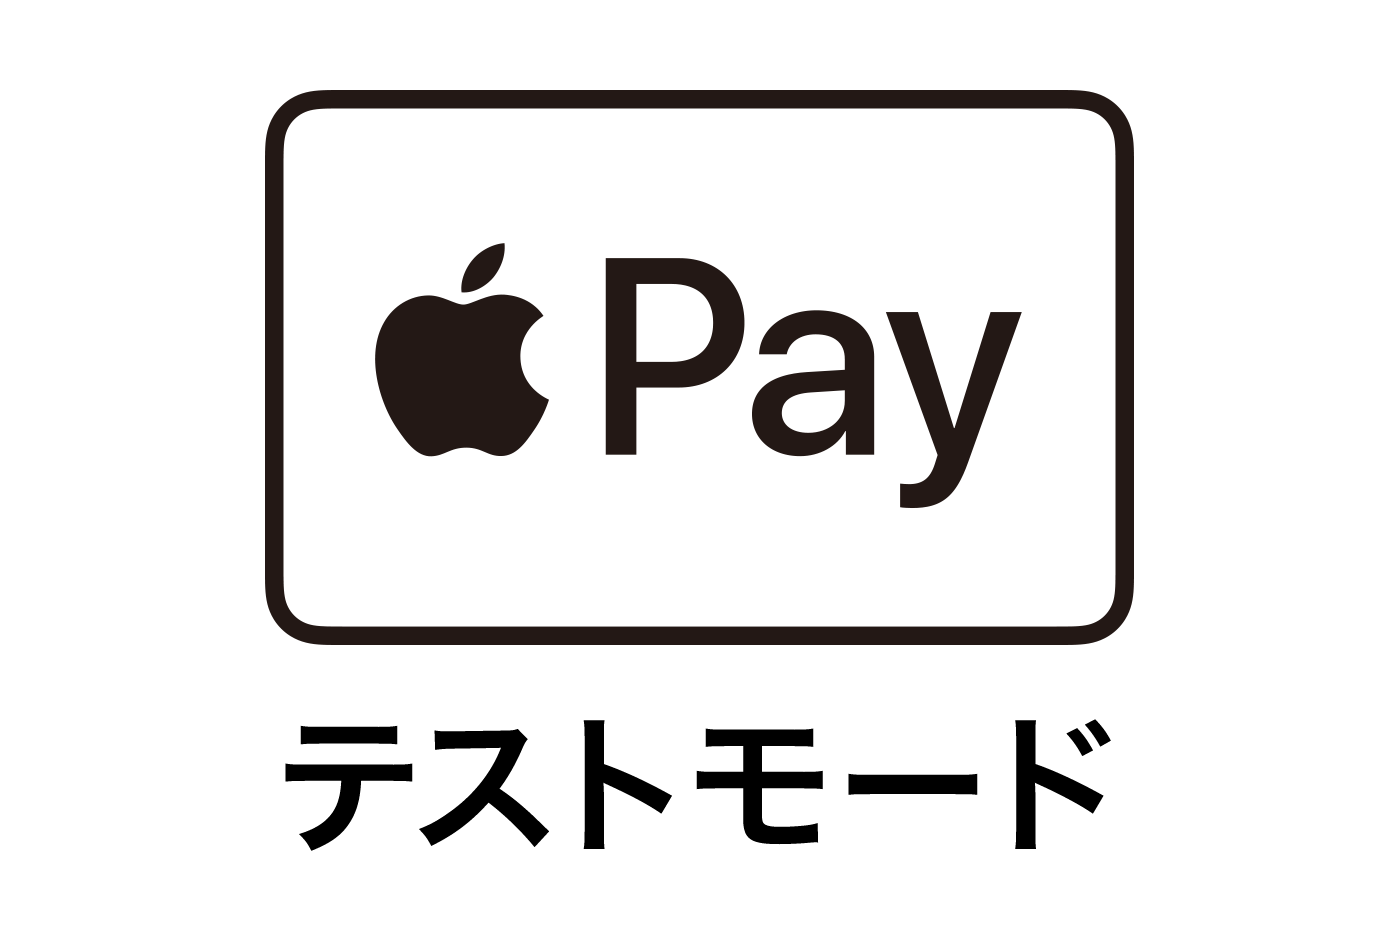 Pay. Эпл Пэй лого. Apple pay вектор. Знак Apple pay. Apple pay иллюстрации.